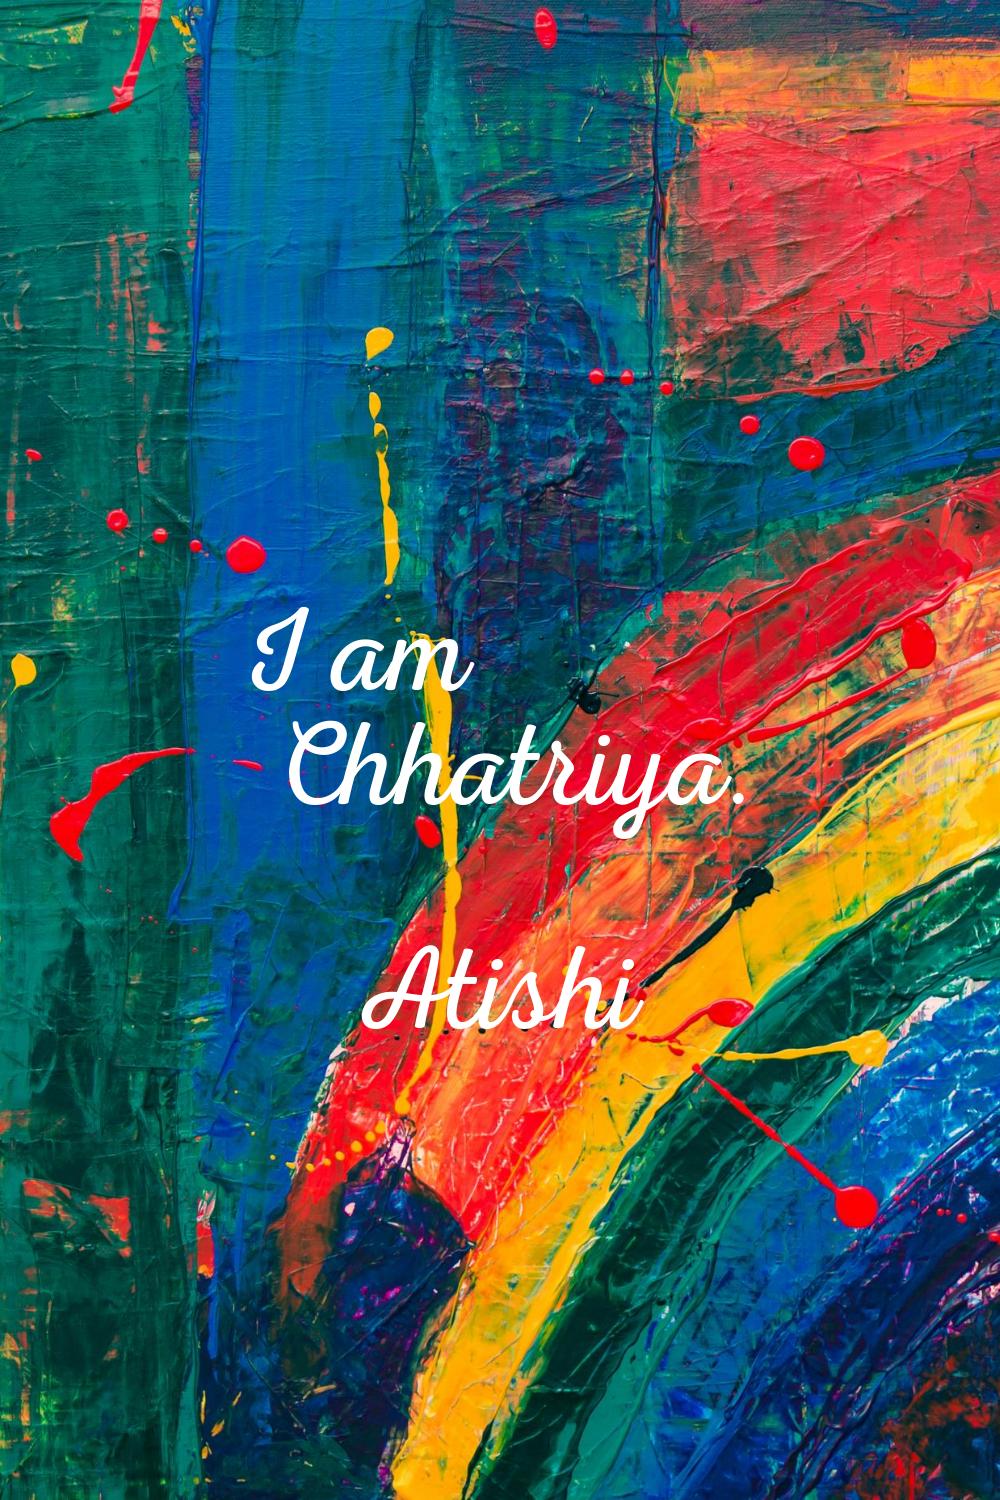 I am Chhatriya.